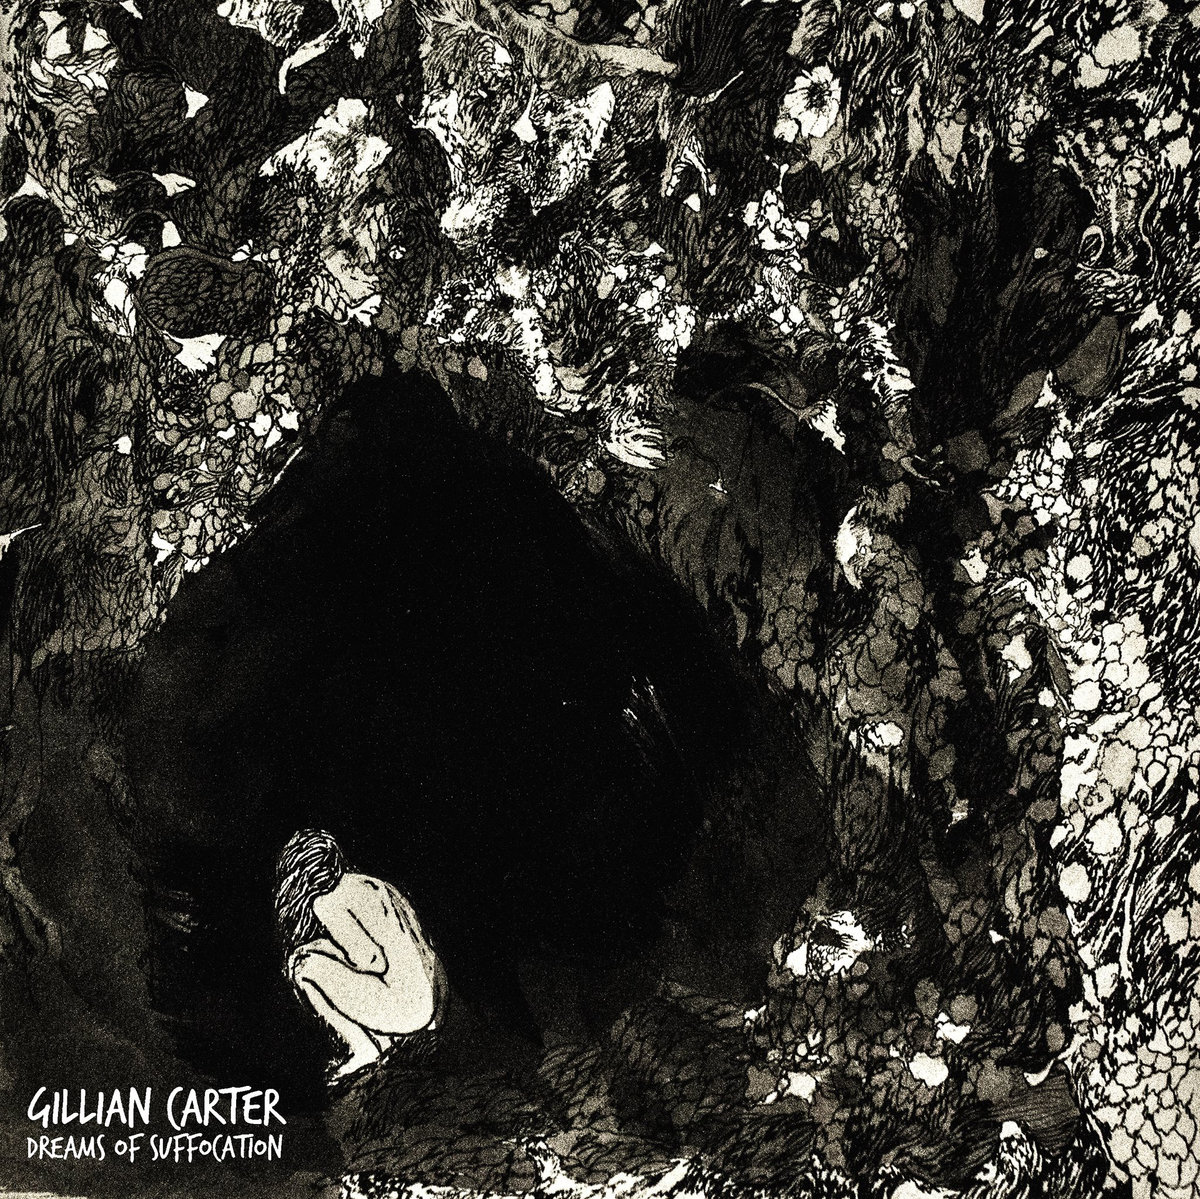  2016. Cover design for Gillian Carter - Dreams of Suffocation. Released through Skeletal Lightning. 